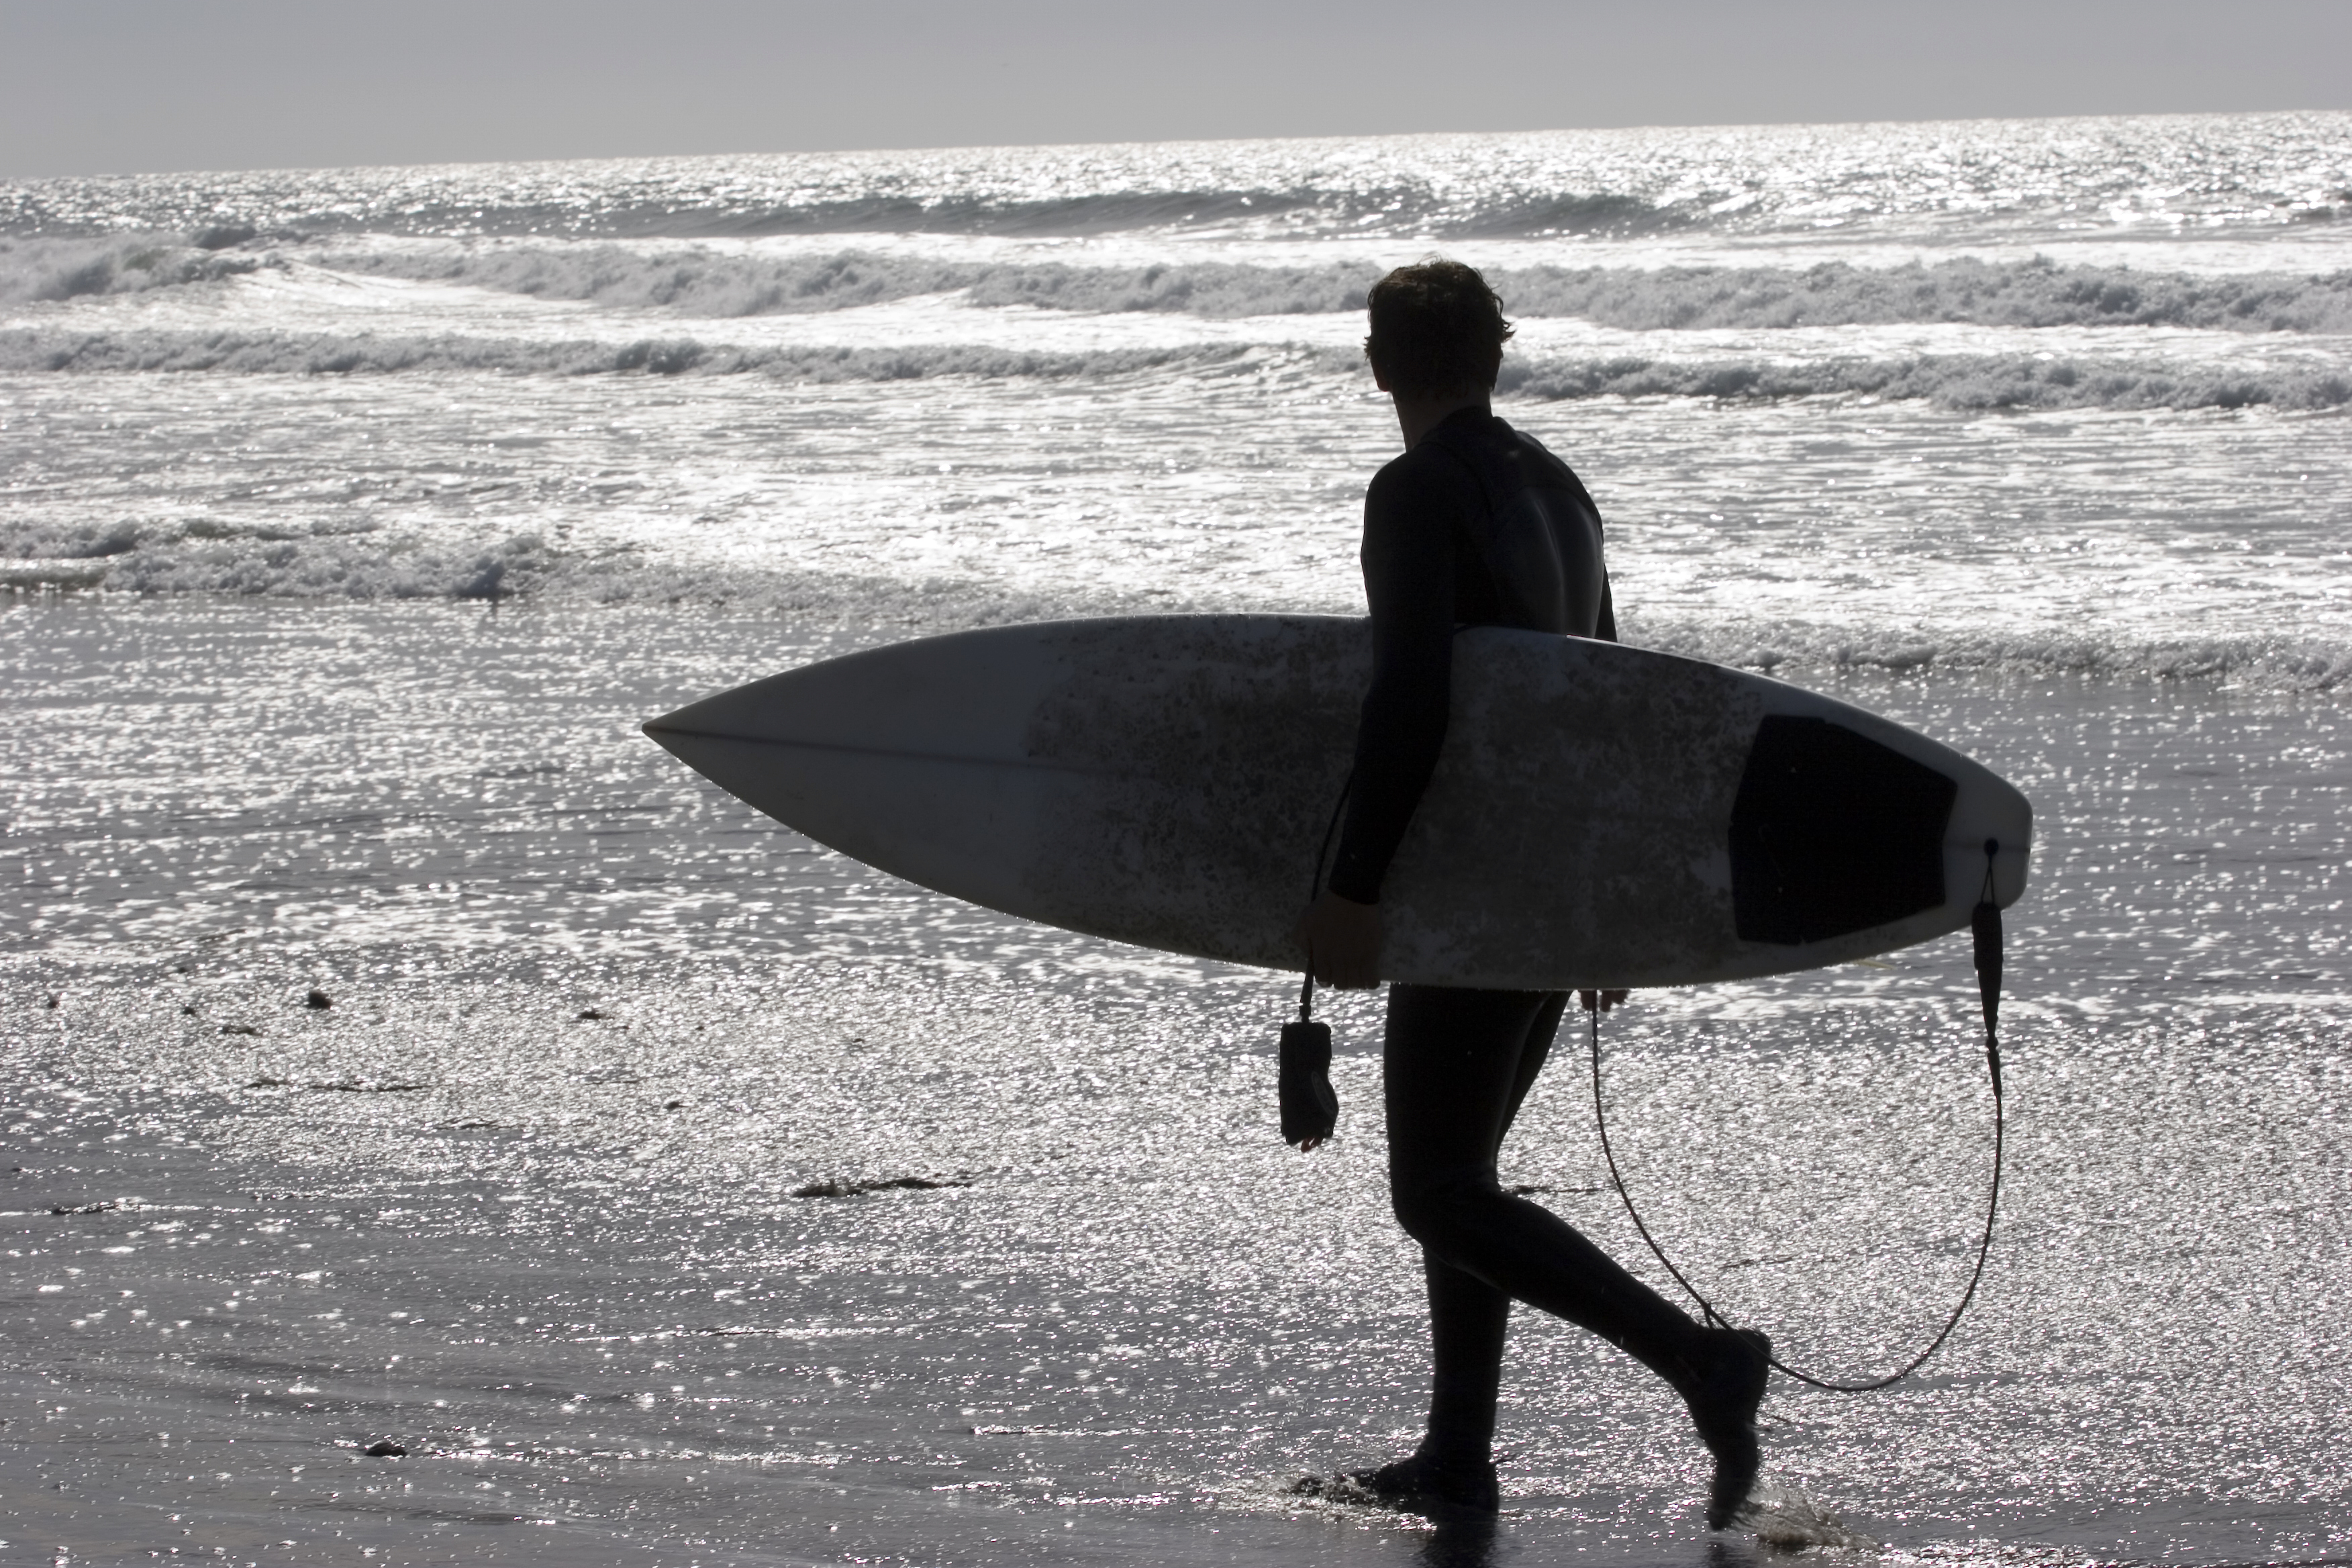 Surfer in California's San Diego